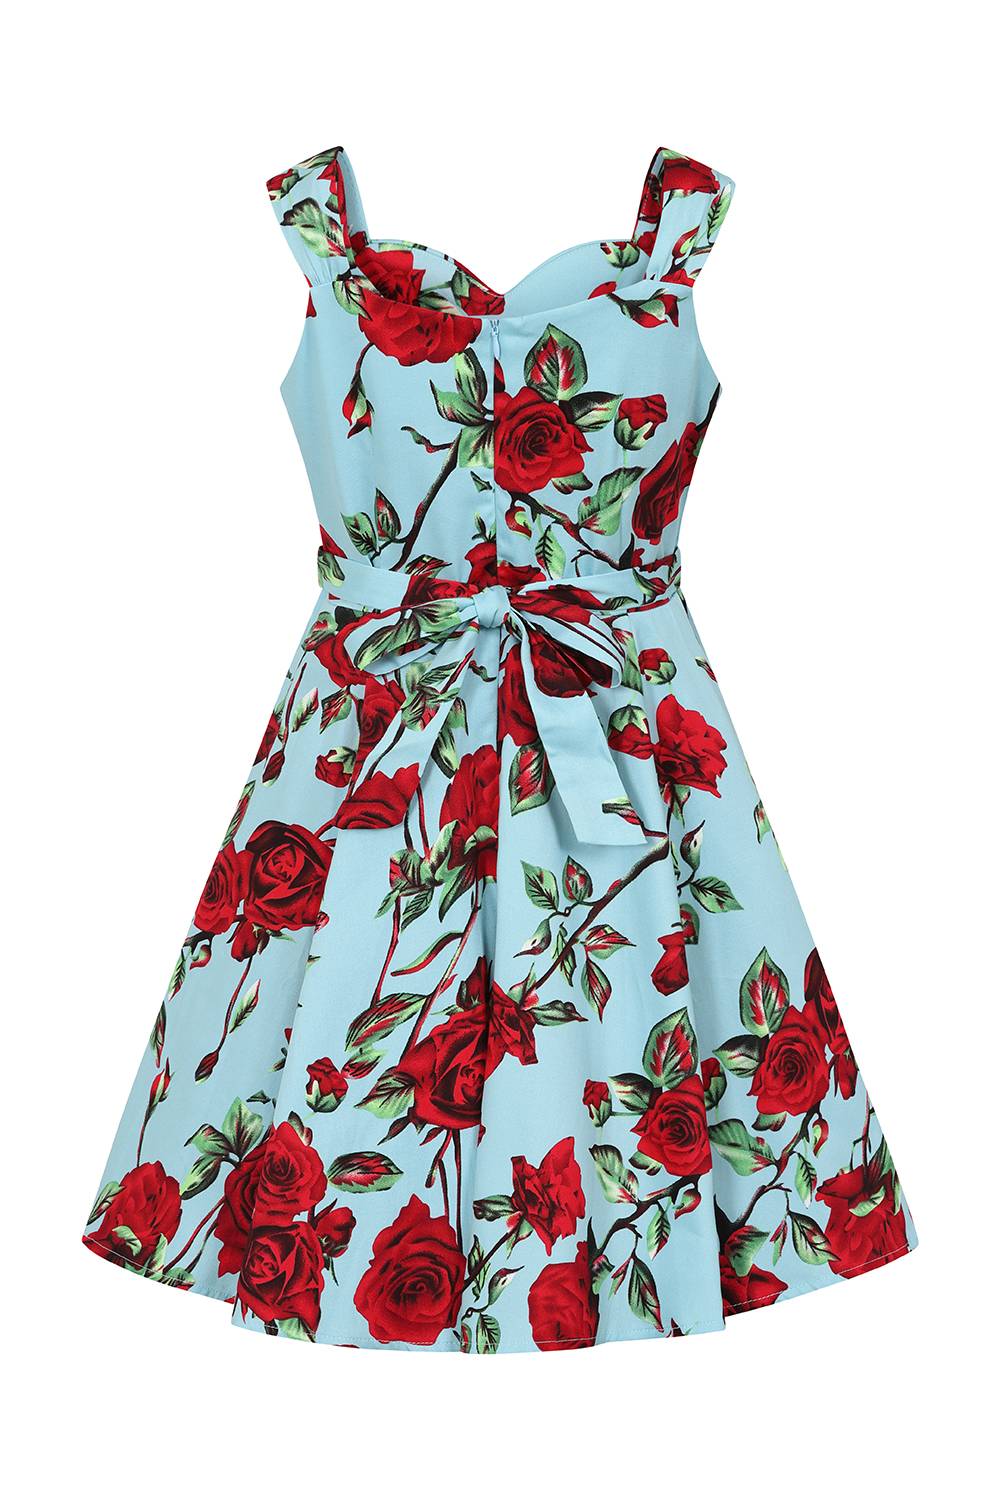 50s Ditsy Rose Floral Summer Dress in blue